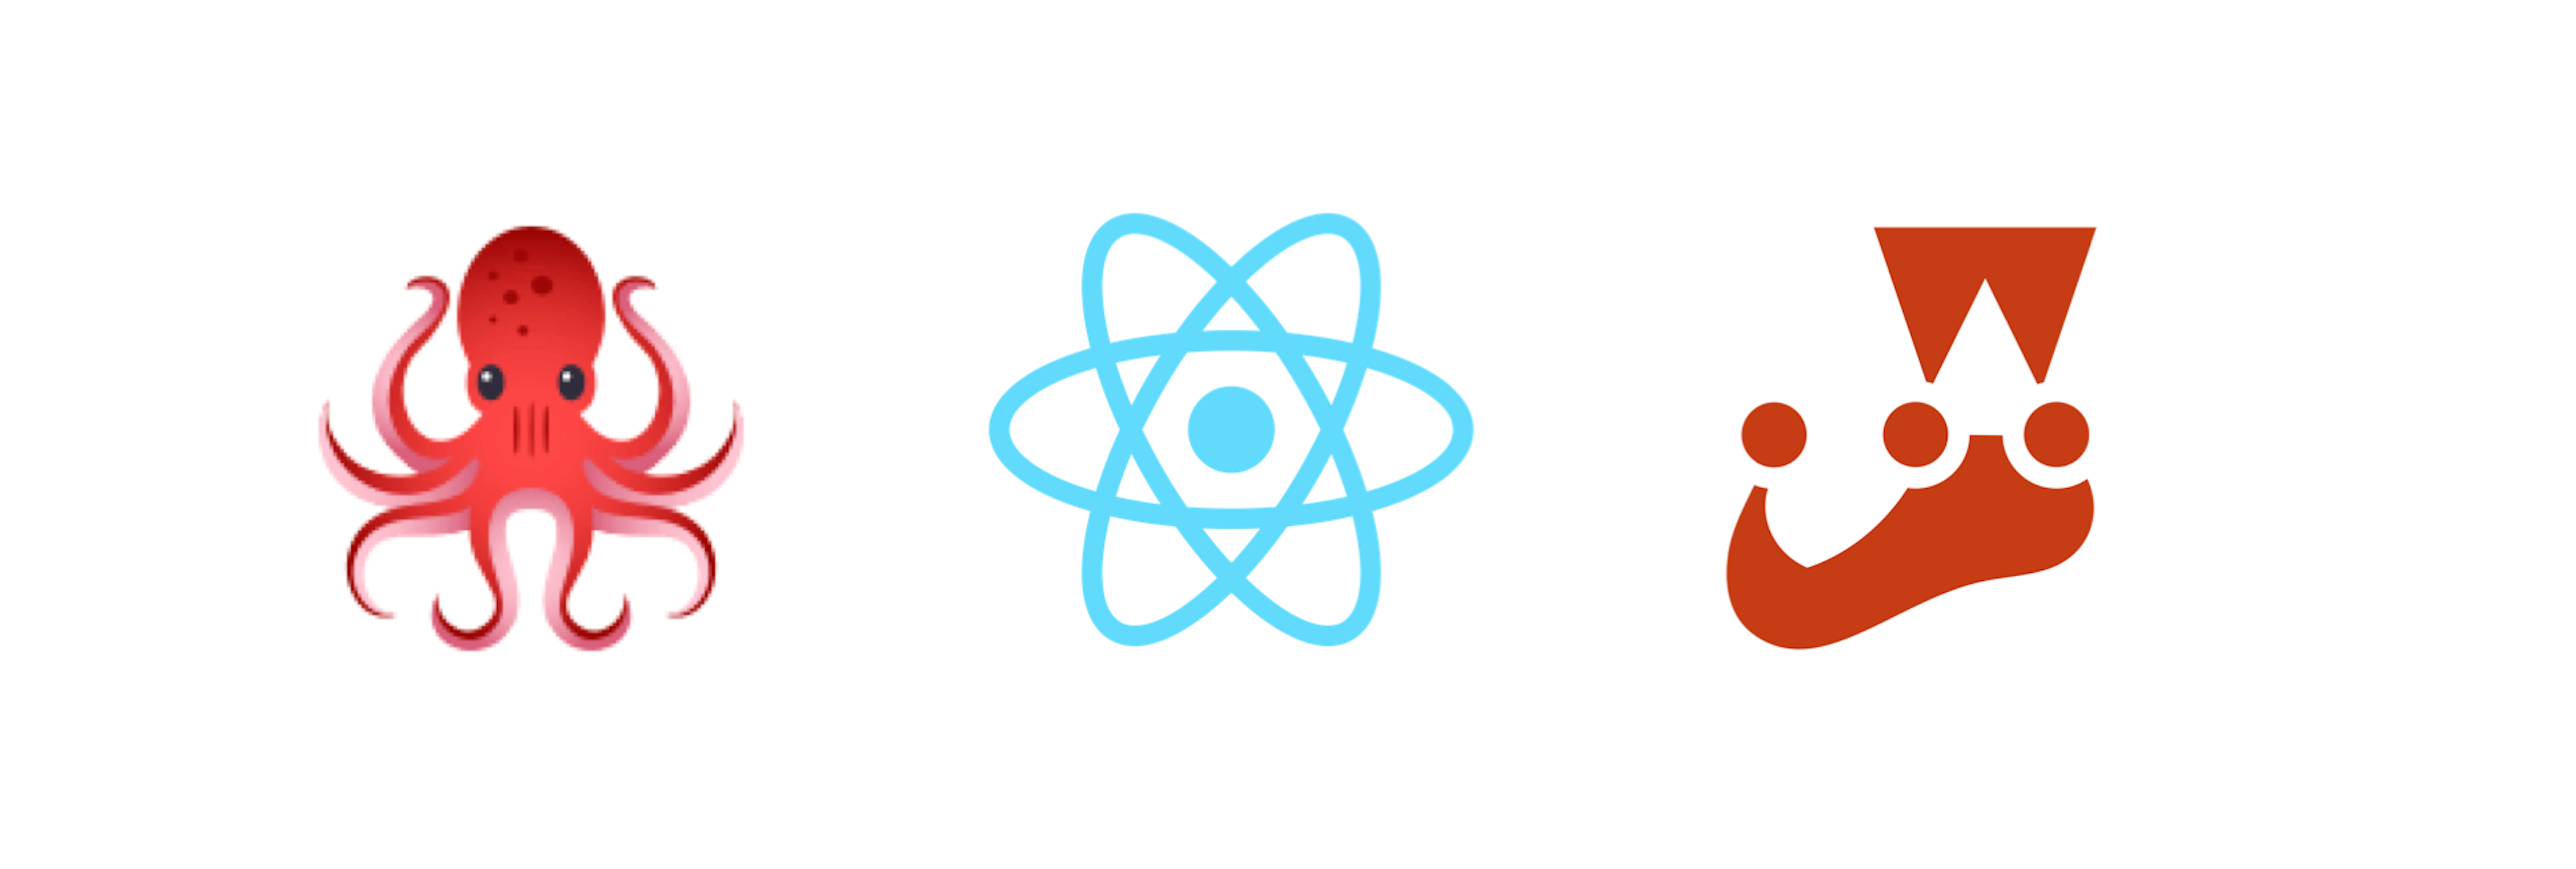 React Testing Library octopus logo, React logo, and Jest logo